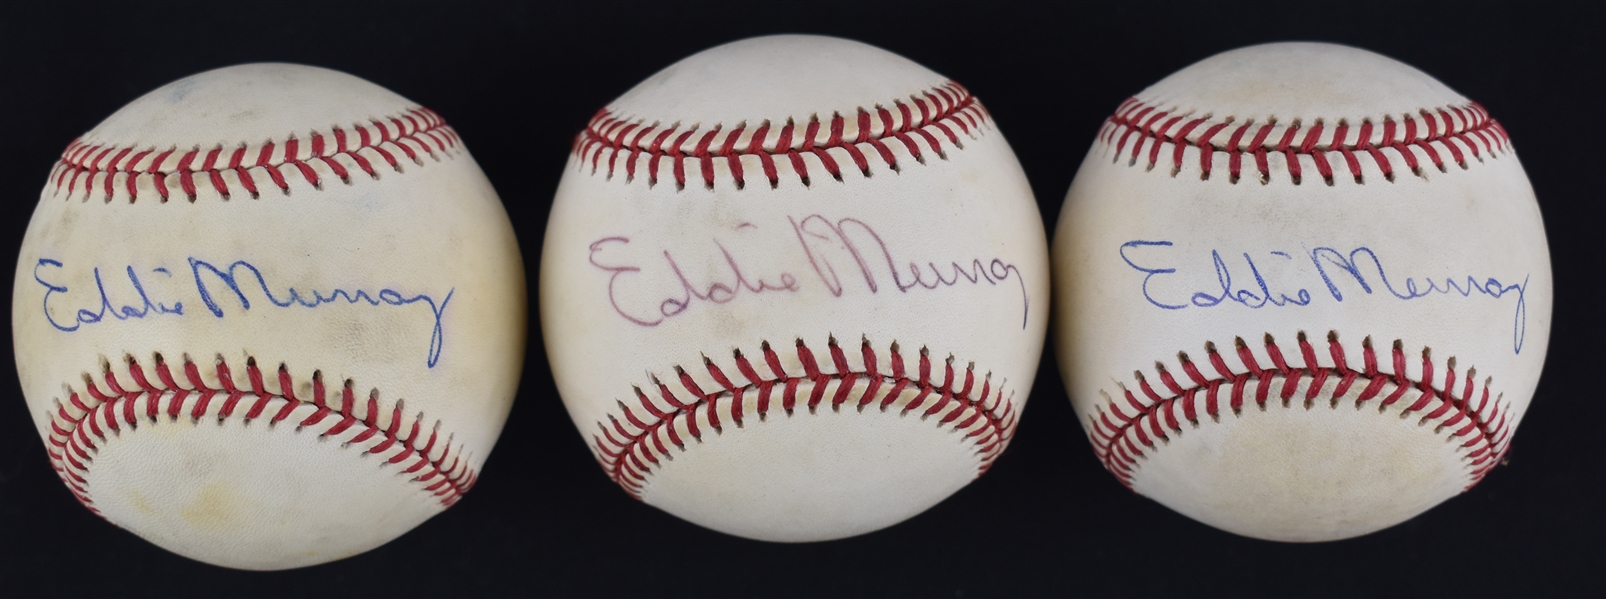 Eddie Murray Lot of 3 Autographed Baseballs w/Puckett Family Provenance